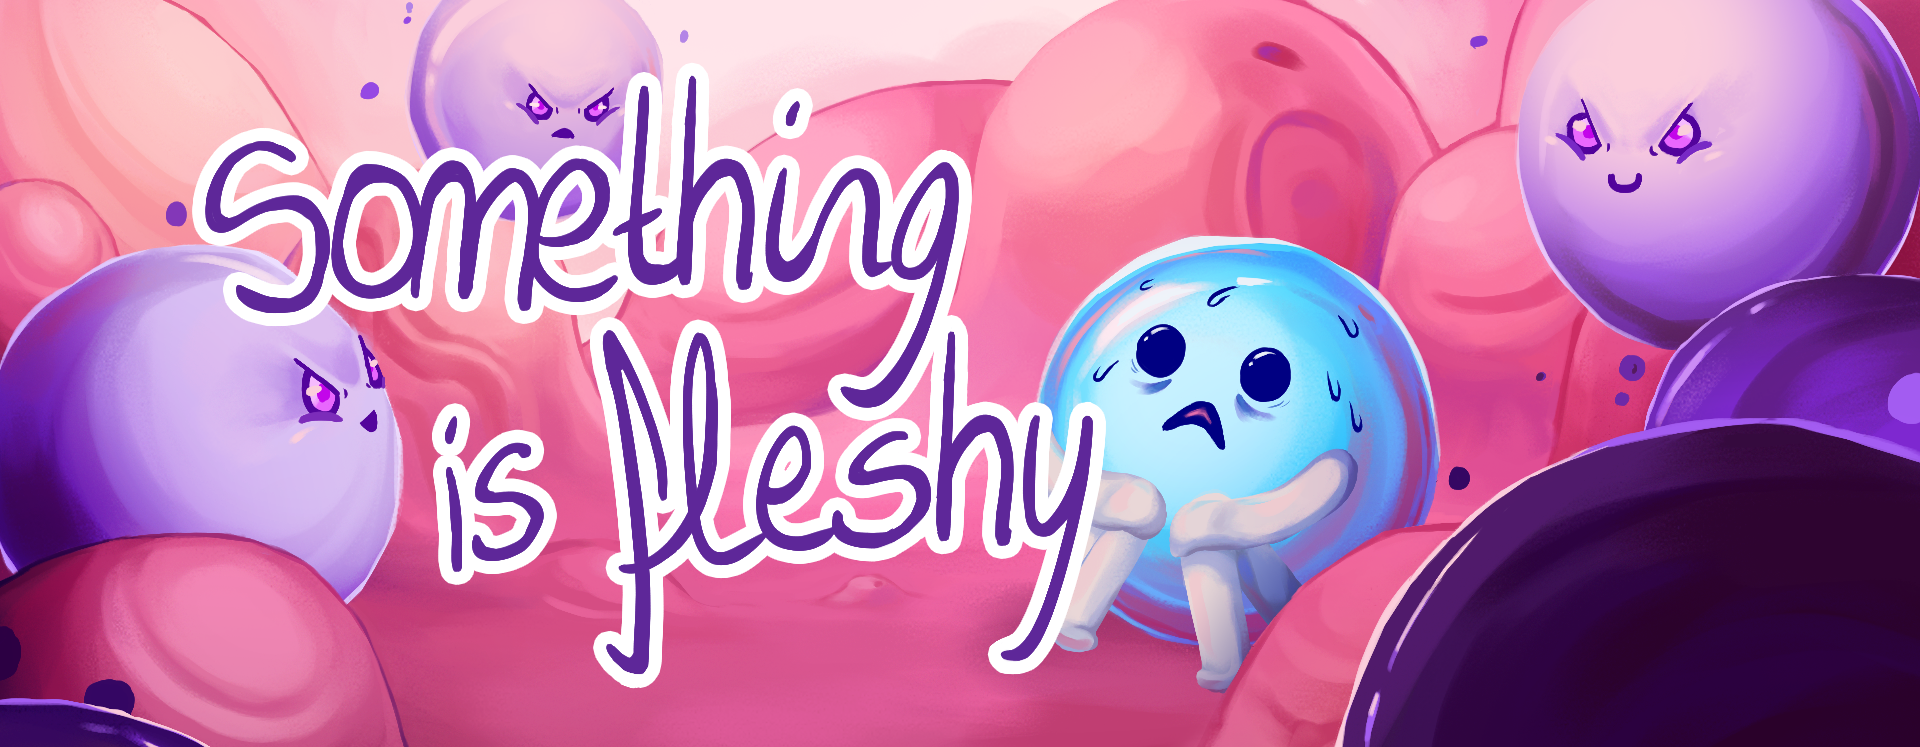 Something is fleshy (Jam version)